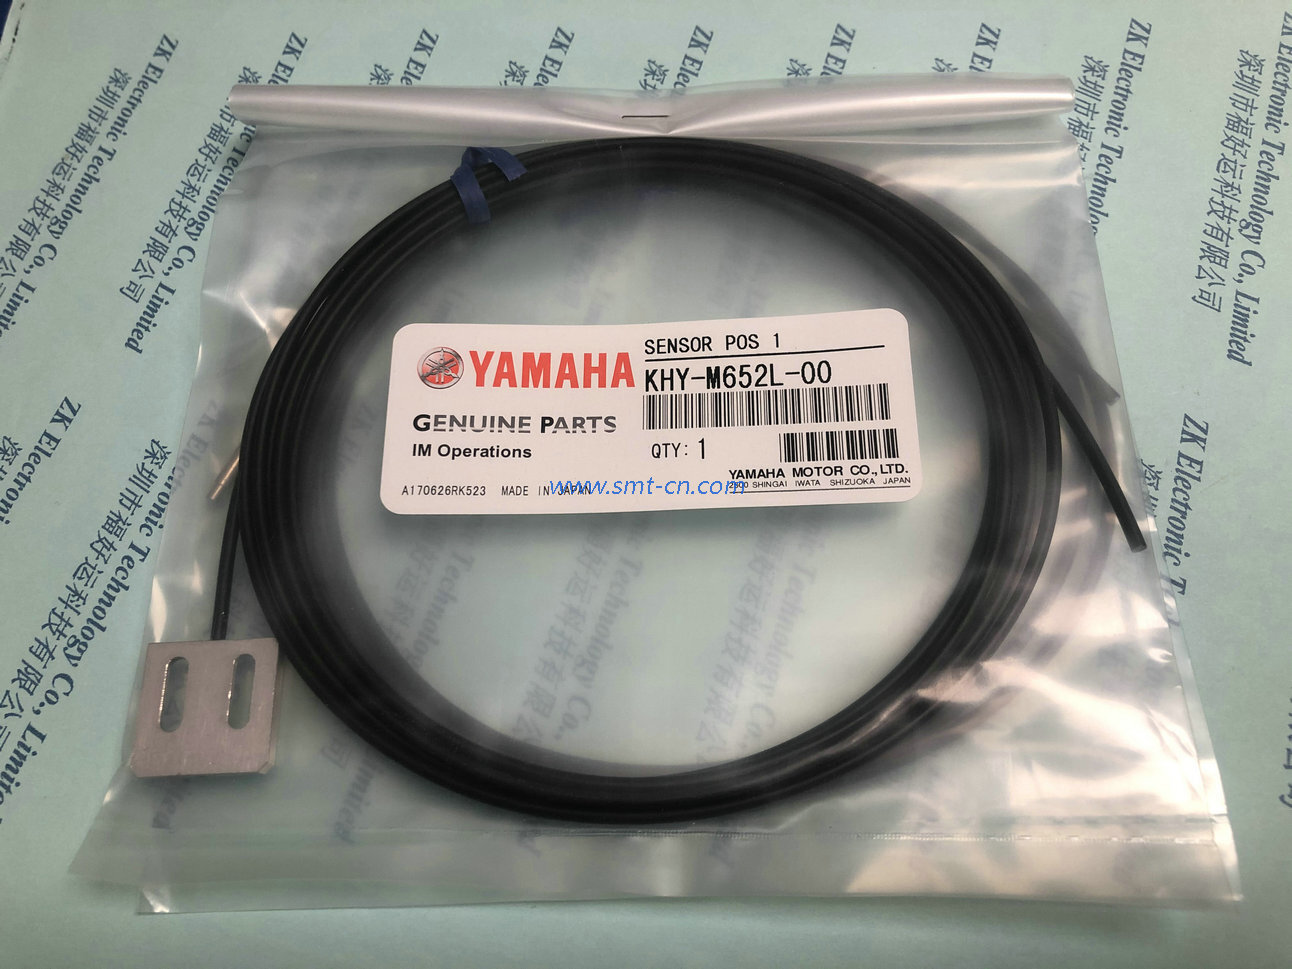 Yamaha KHY-M652L-00 Sensor, POS.1 (2)